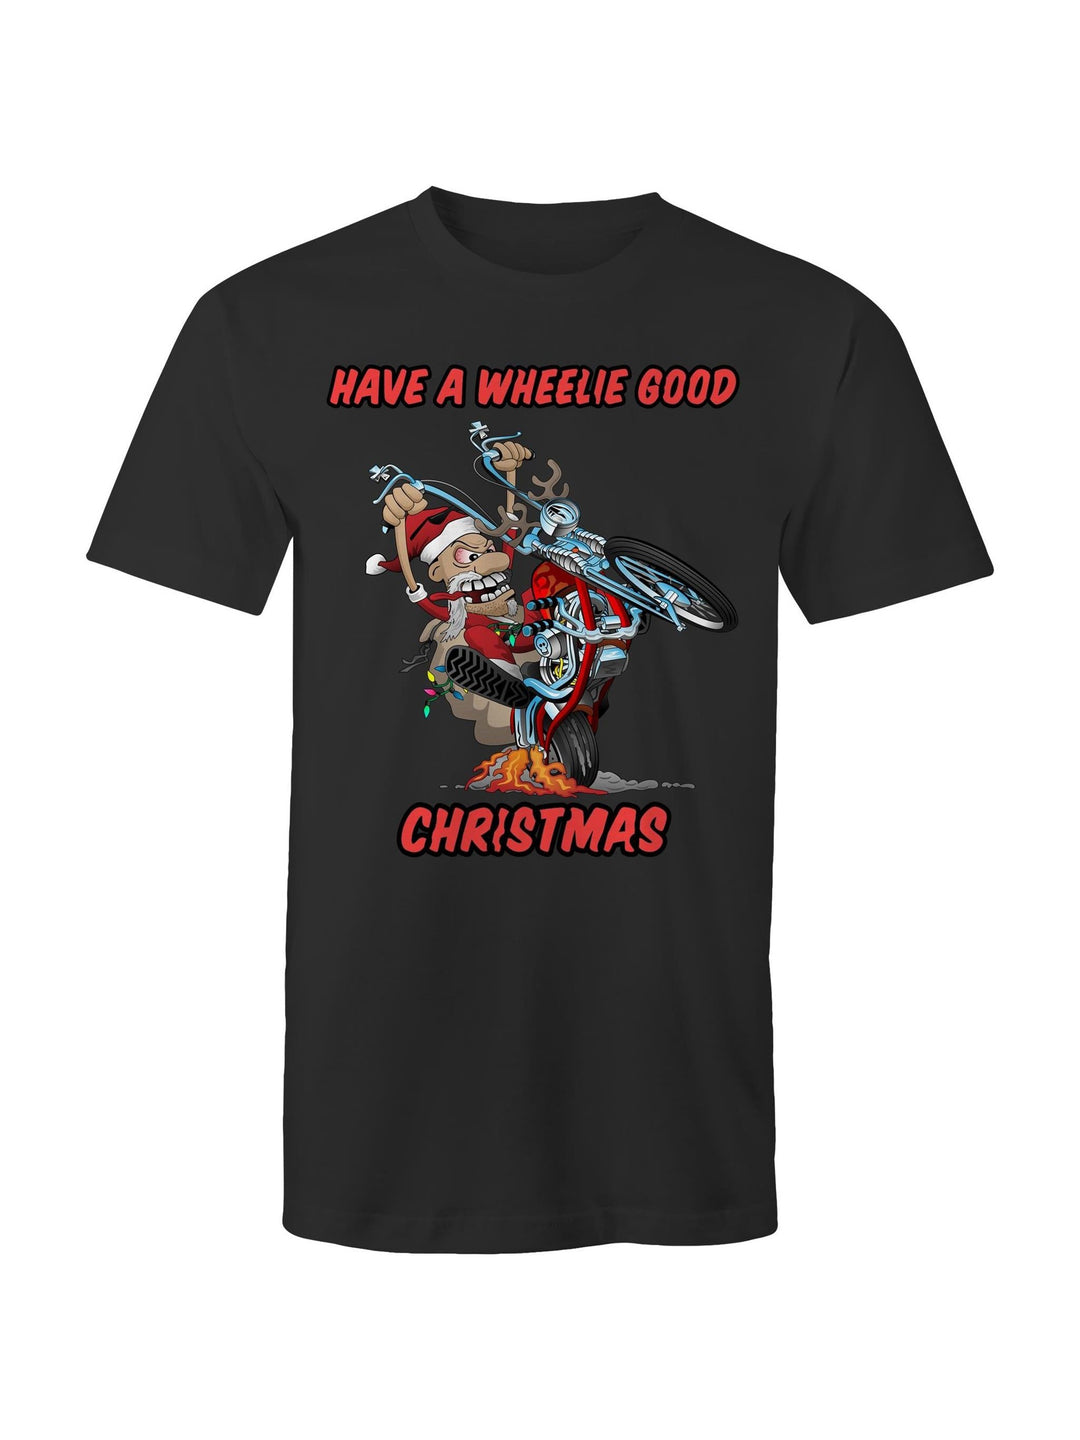 Wheelie Good Christmas - Mens T-Shirt